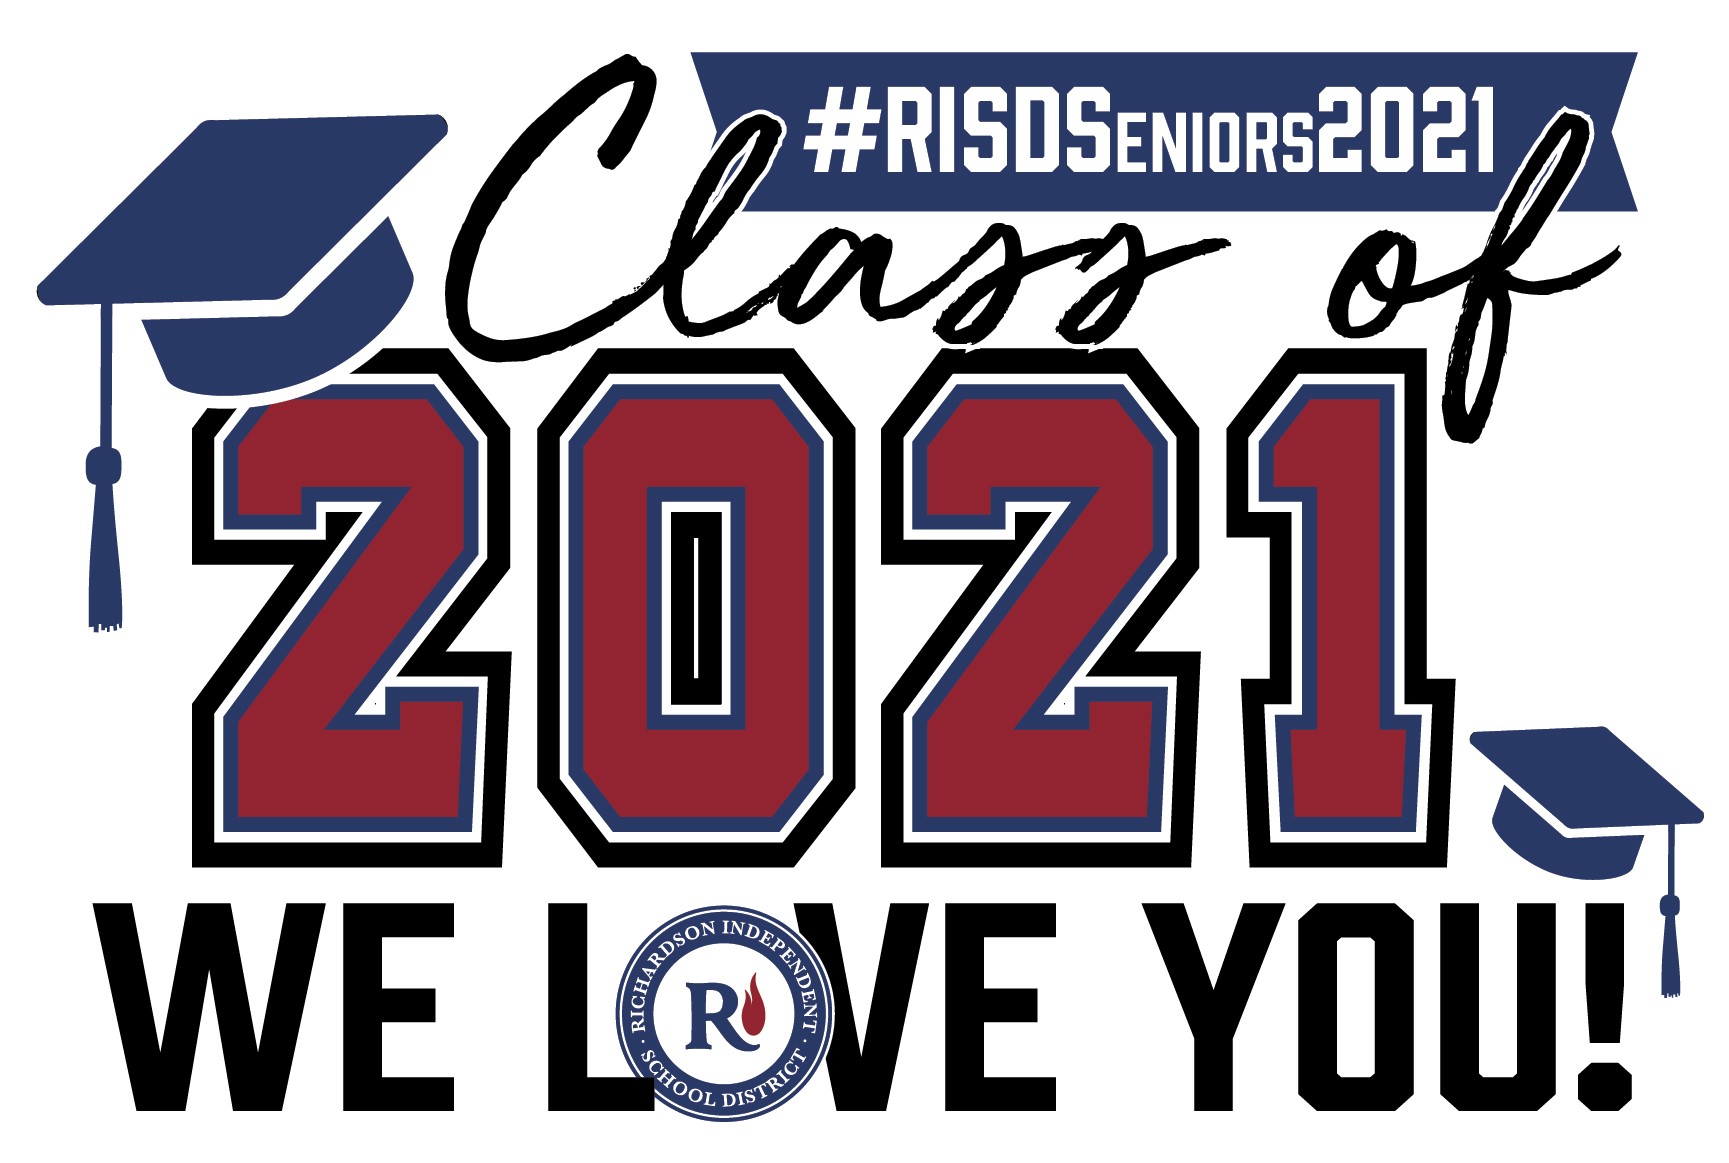 Class of 2021 We love you #RISDseniors2021